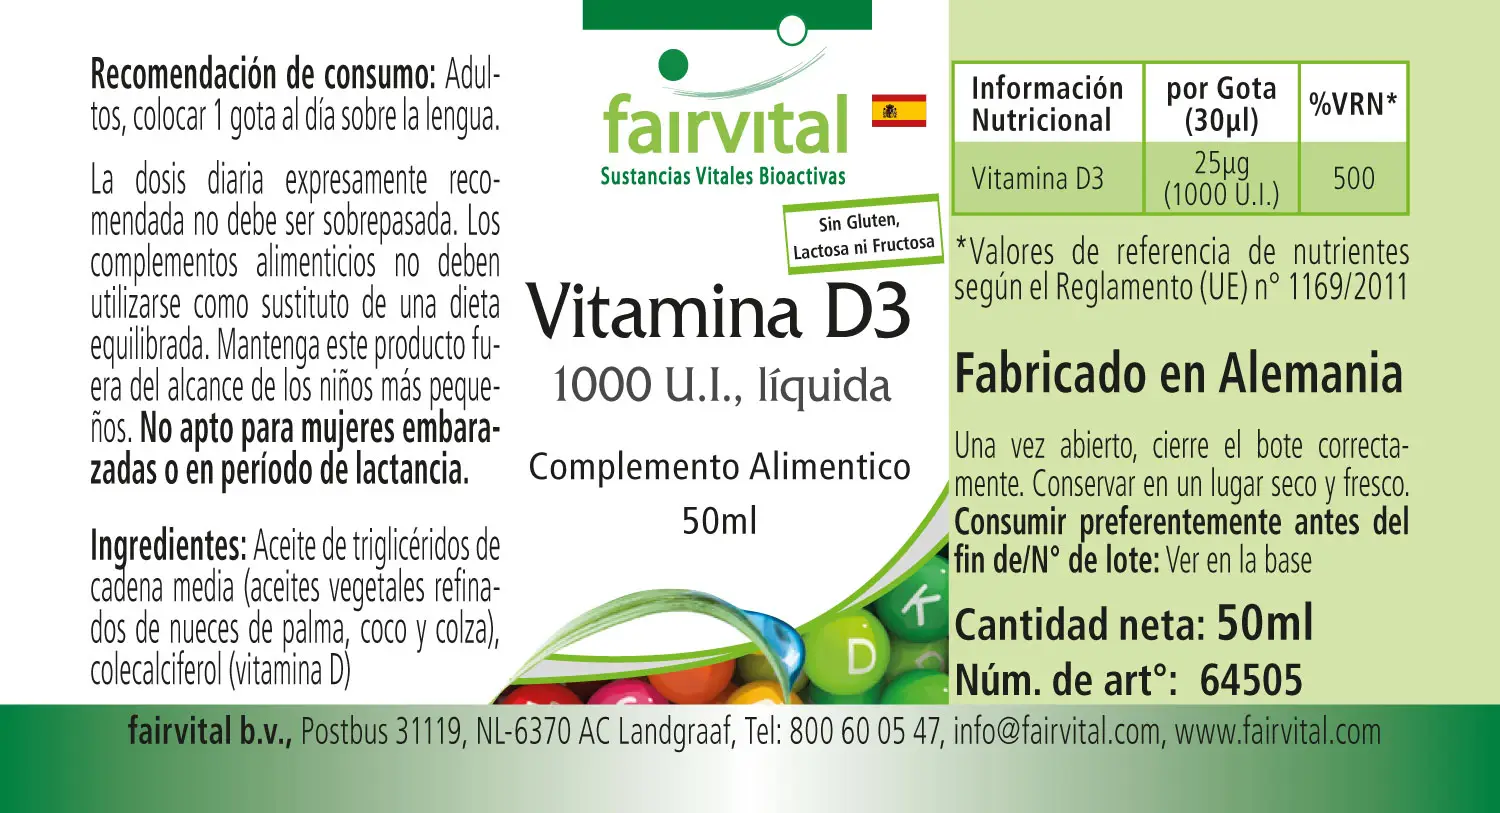 Vitamine D3 vloeistof - 1000 I.U. per druppel - 50ml